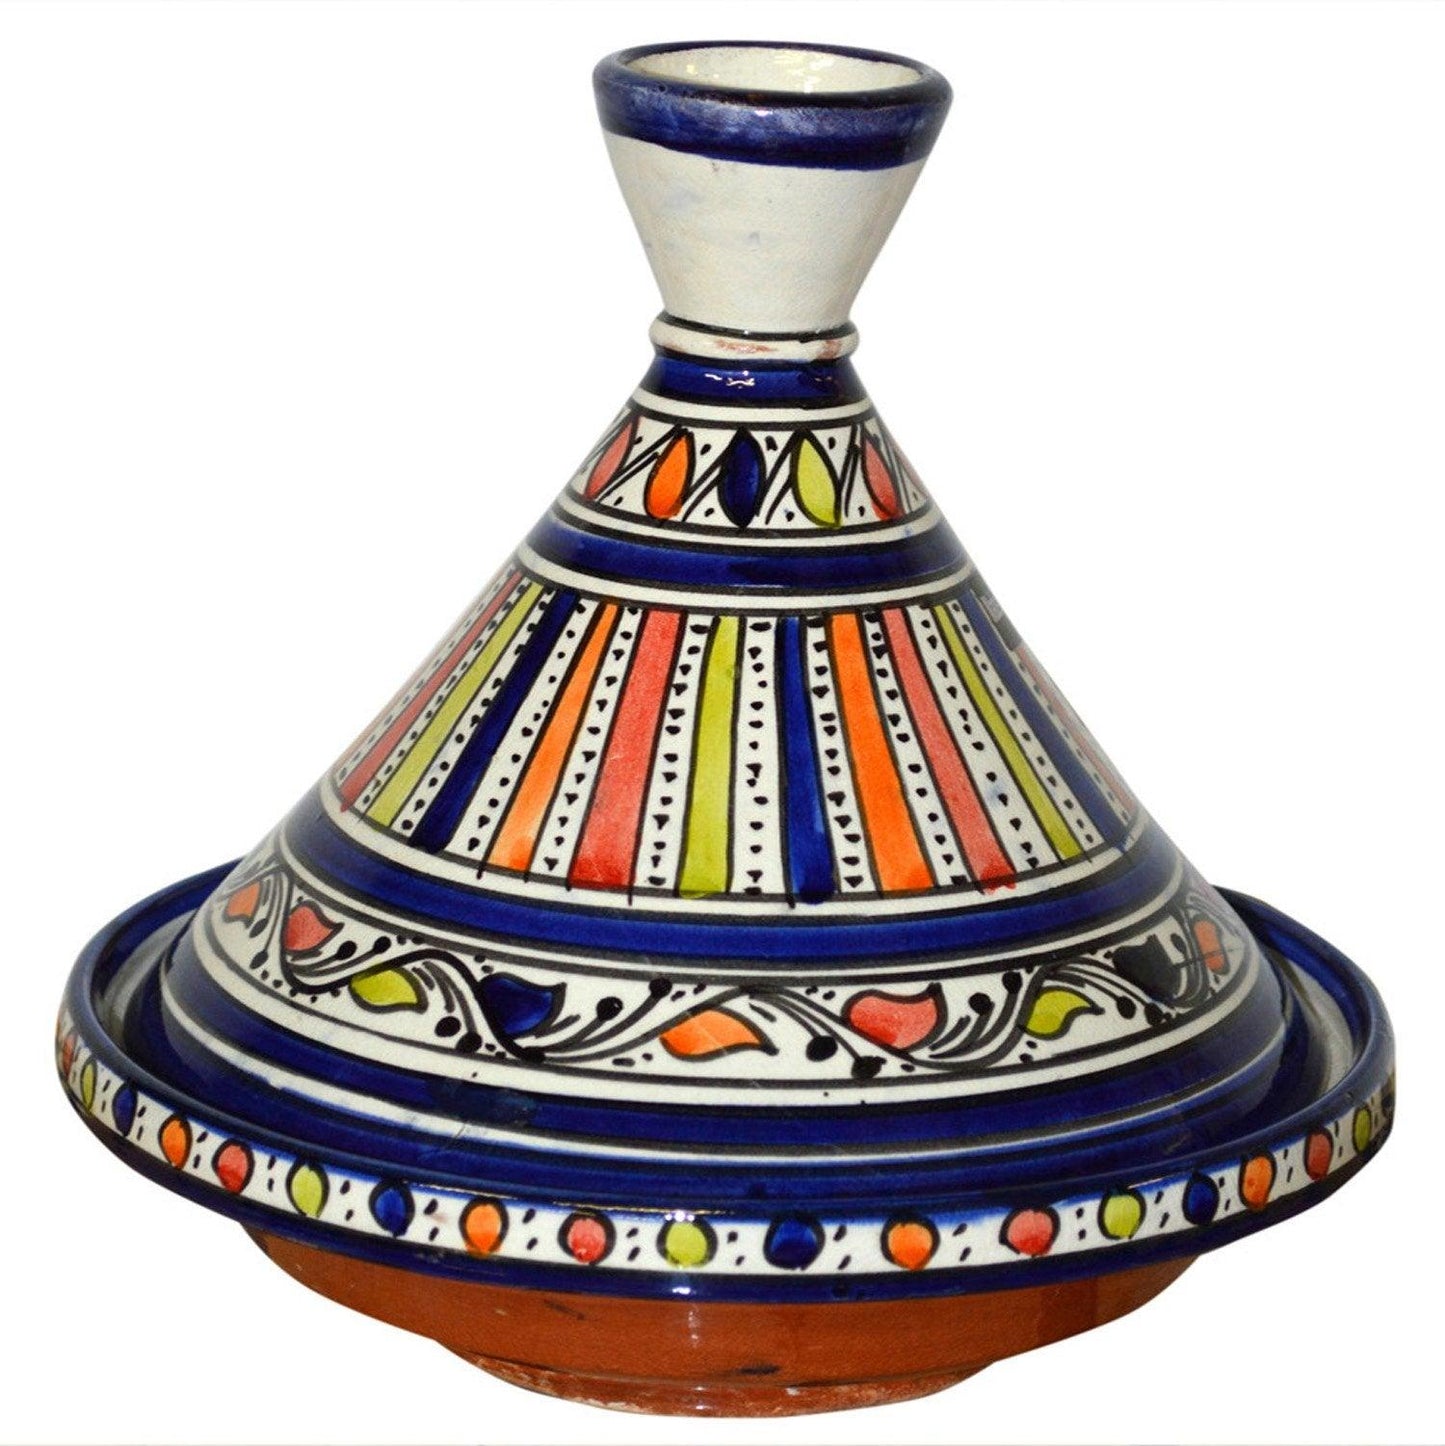 Moroccan Handmade Serving Tagine Exquisite Ceramic With Vivid colors Original 10 Inches in Diameter - CookCave